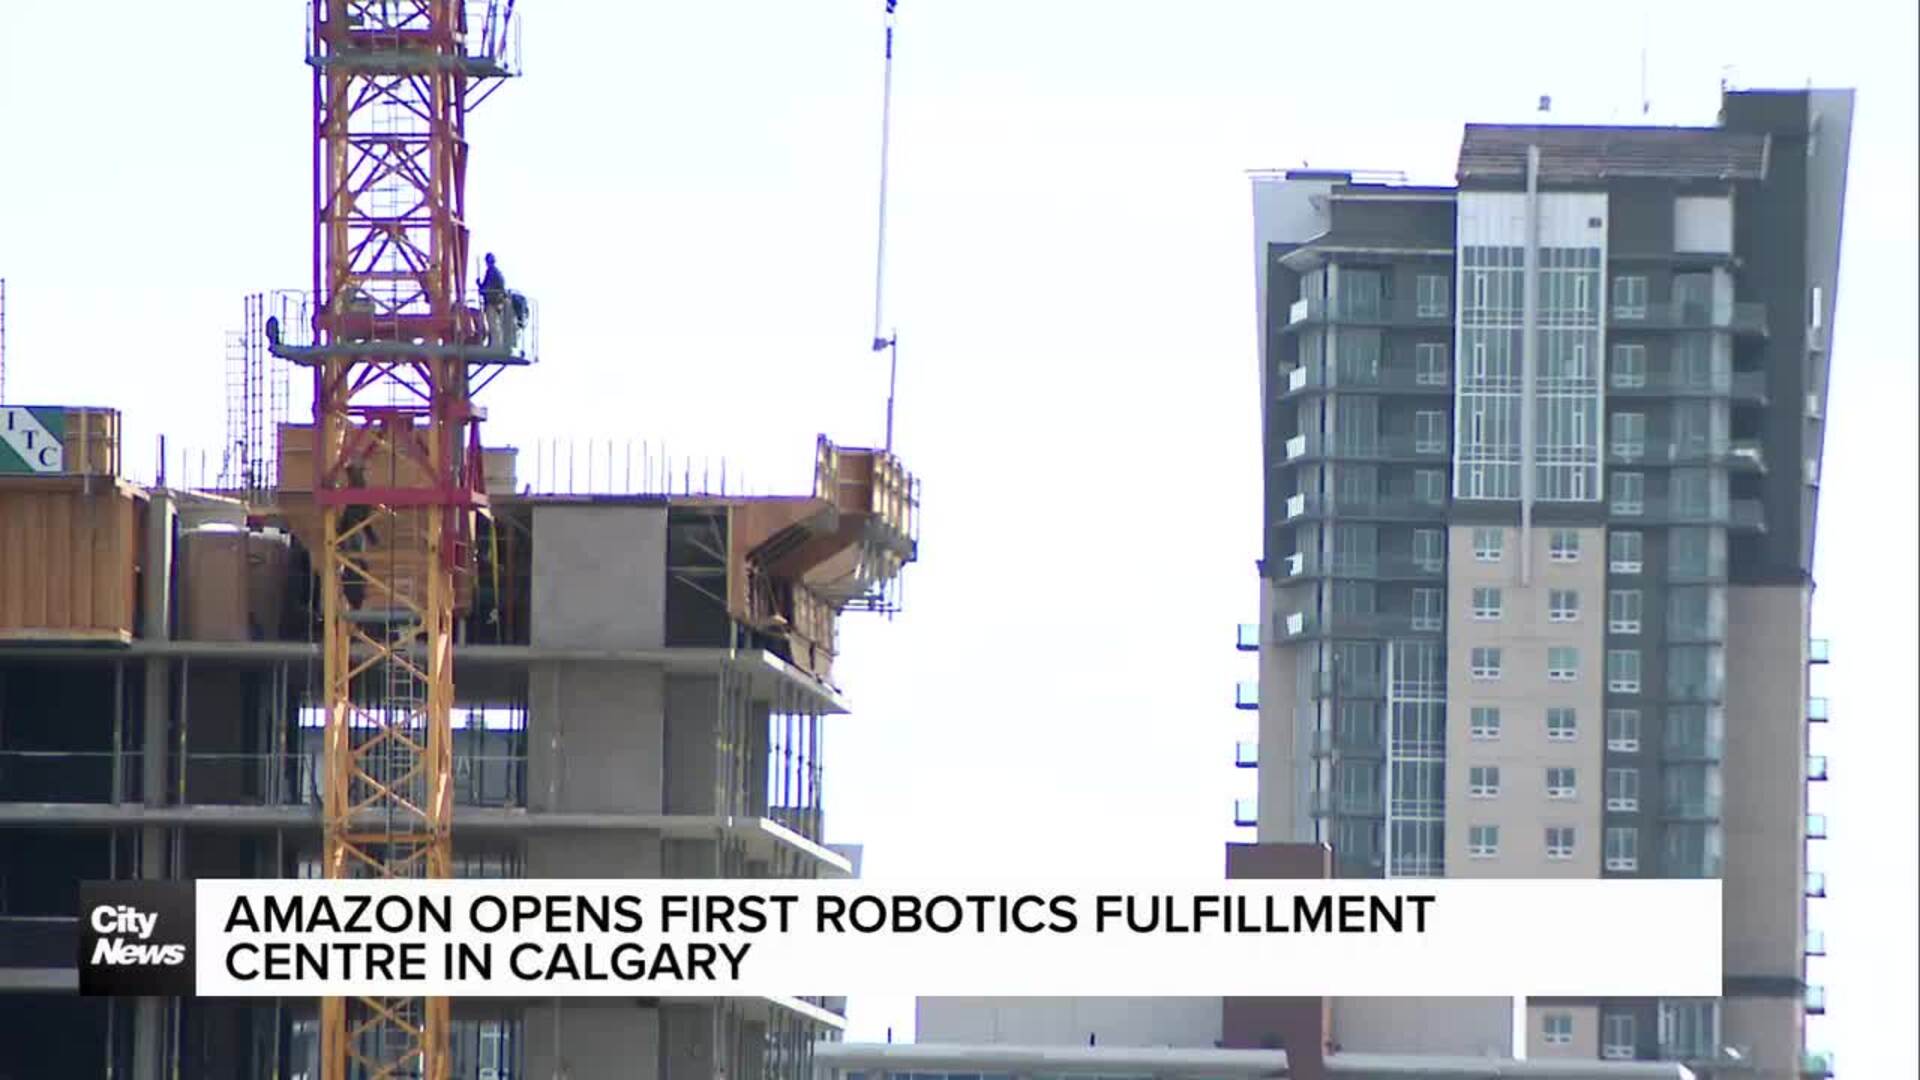 Amazon opens first robotics fulfillment centre in Calgary